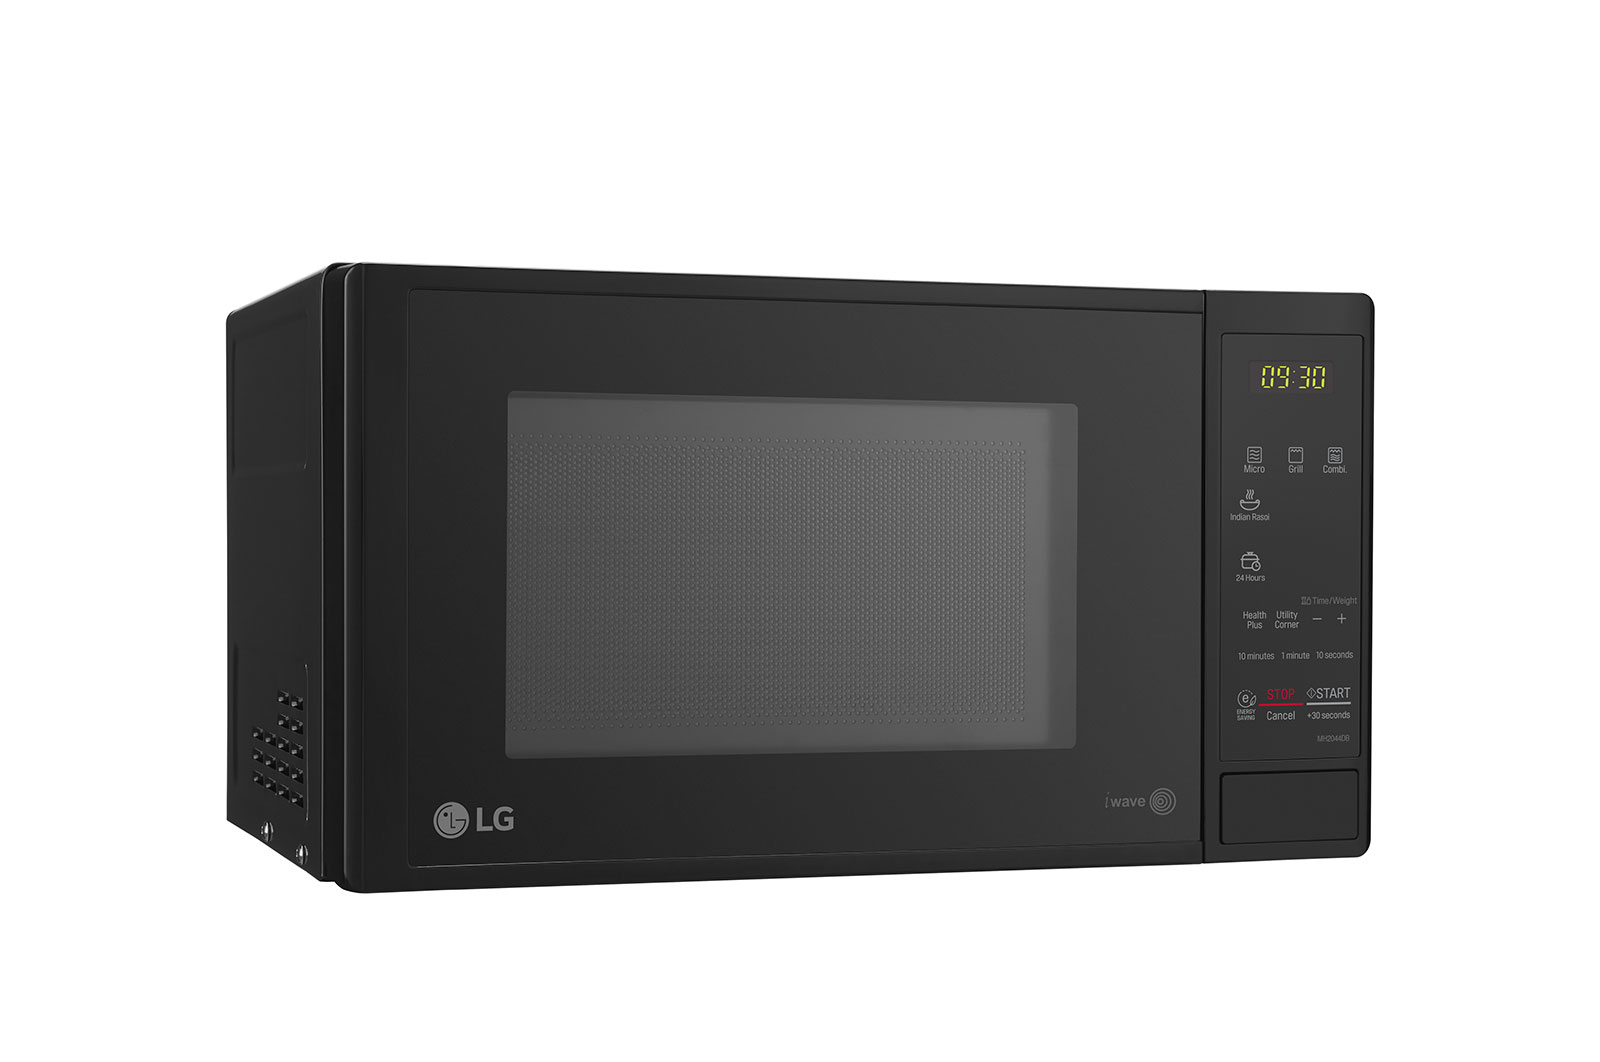 LG 20L Microwave with Grill | LG Electronics Sri Lanka